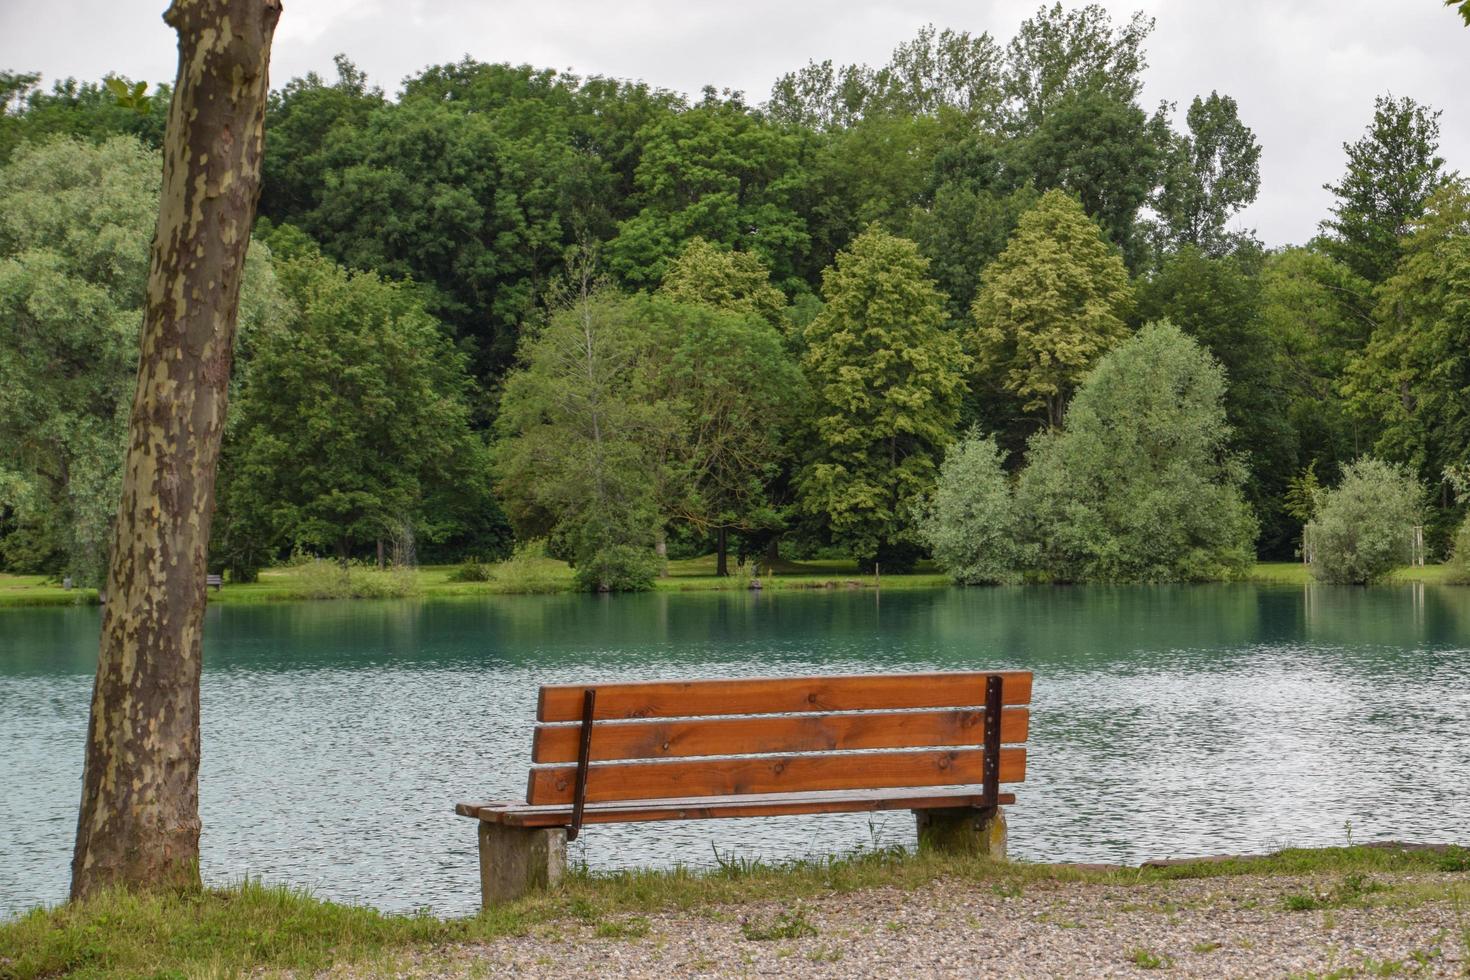 The lake bench photo